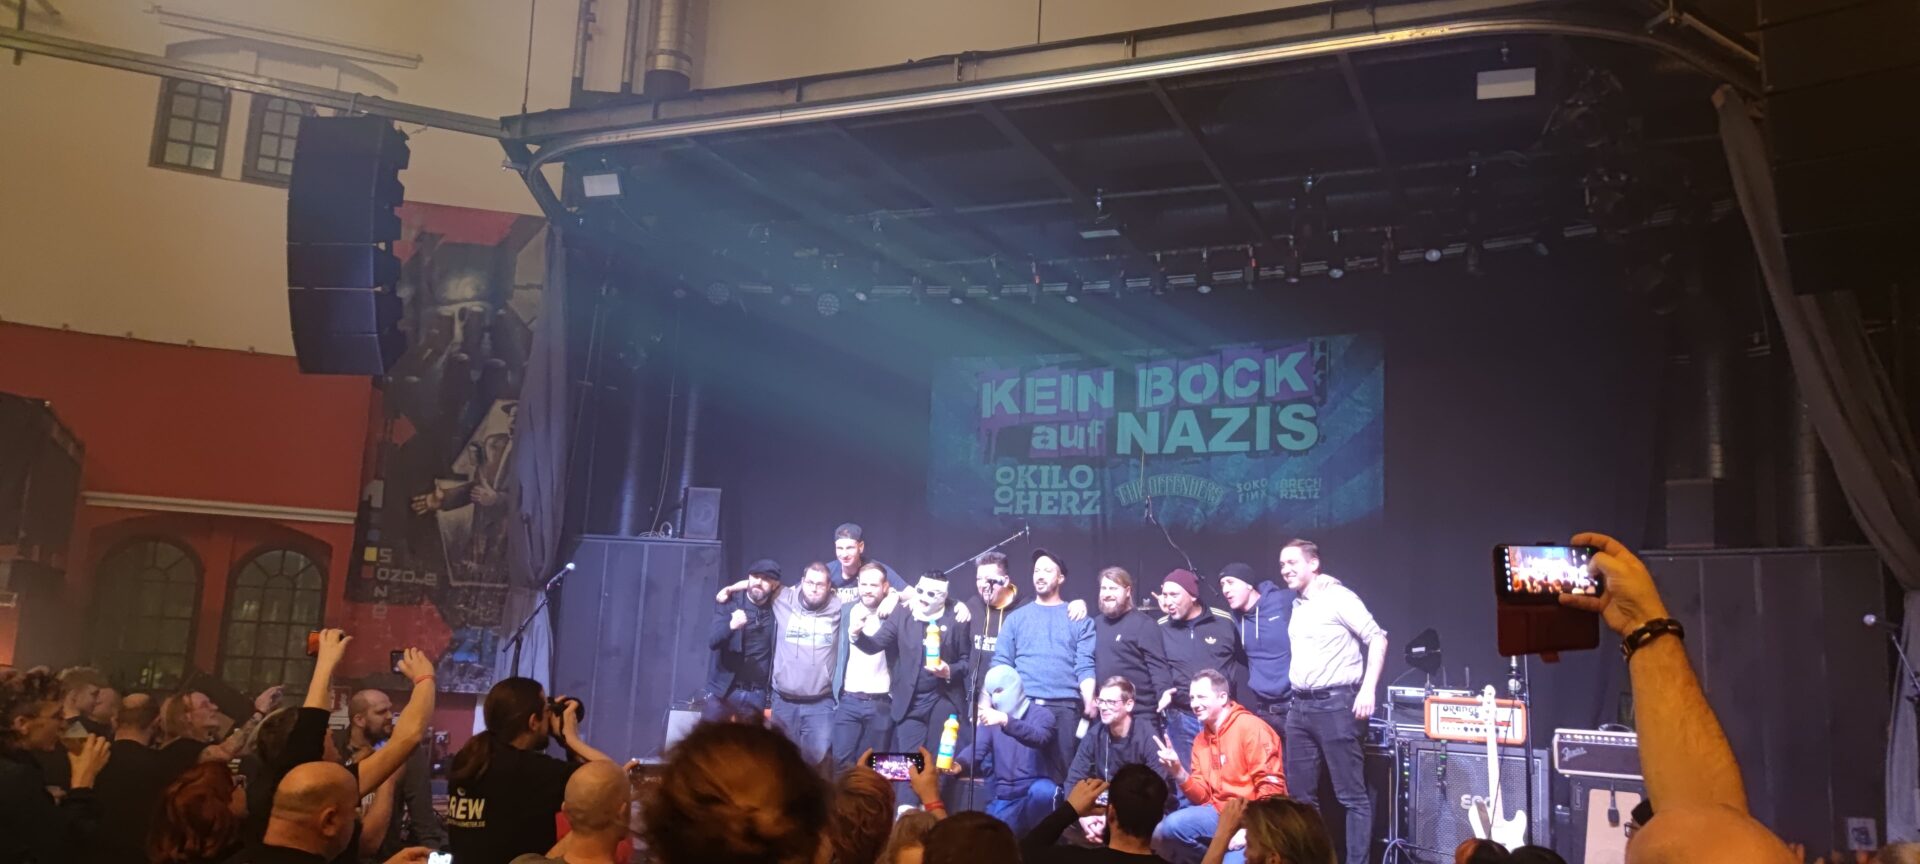 Kein Bock auf Nazis – 100 Kilo Herz, The Offenders, SOKO LINX, Brechraitz